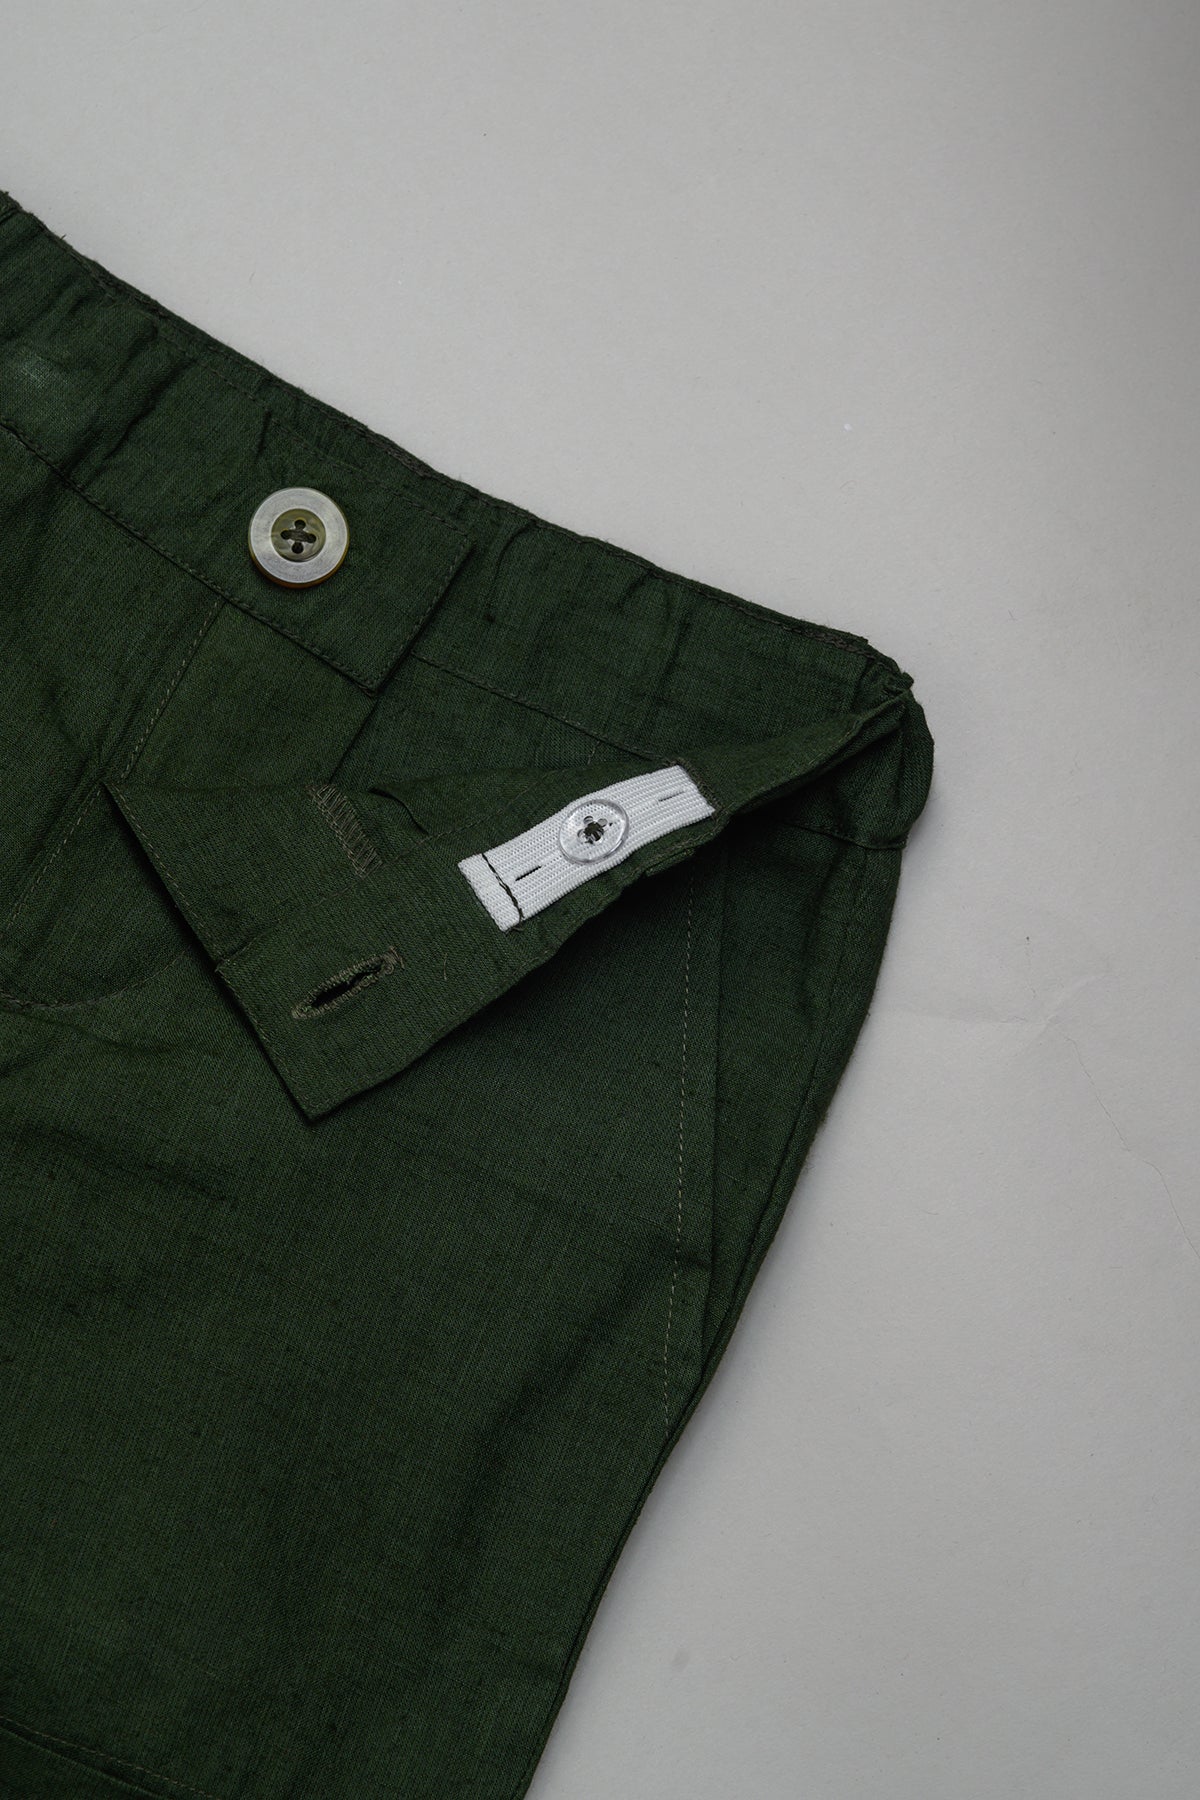 Pinto Short and Blockprint Shirt - Green